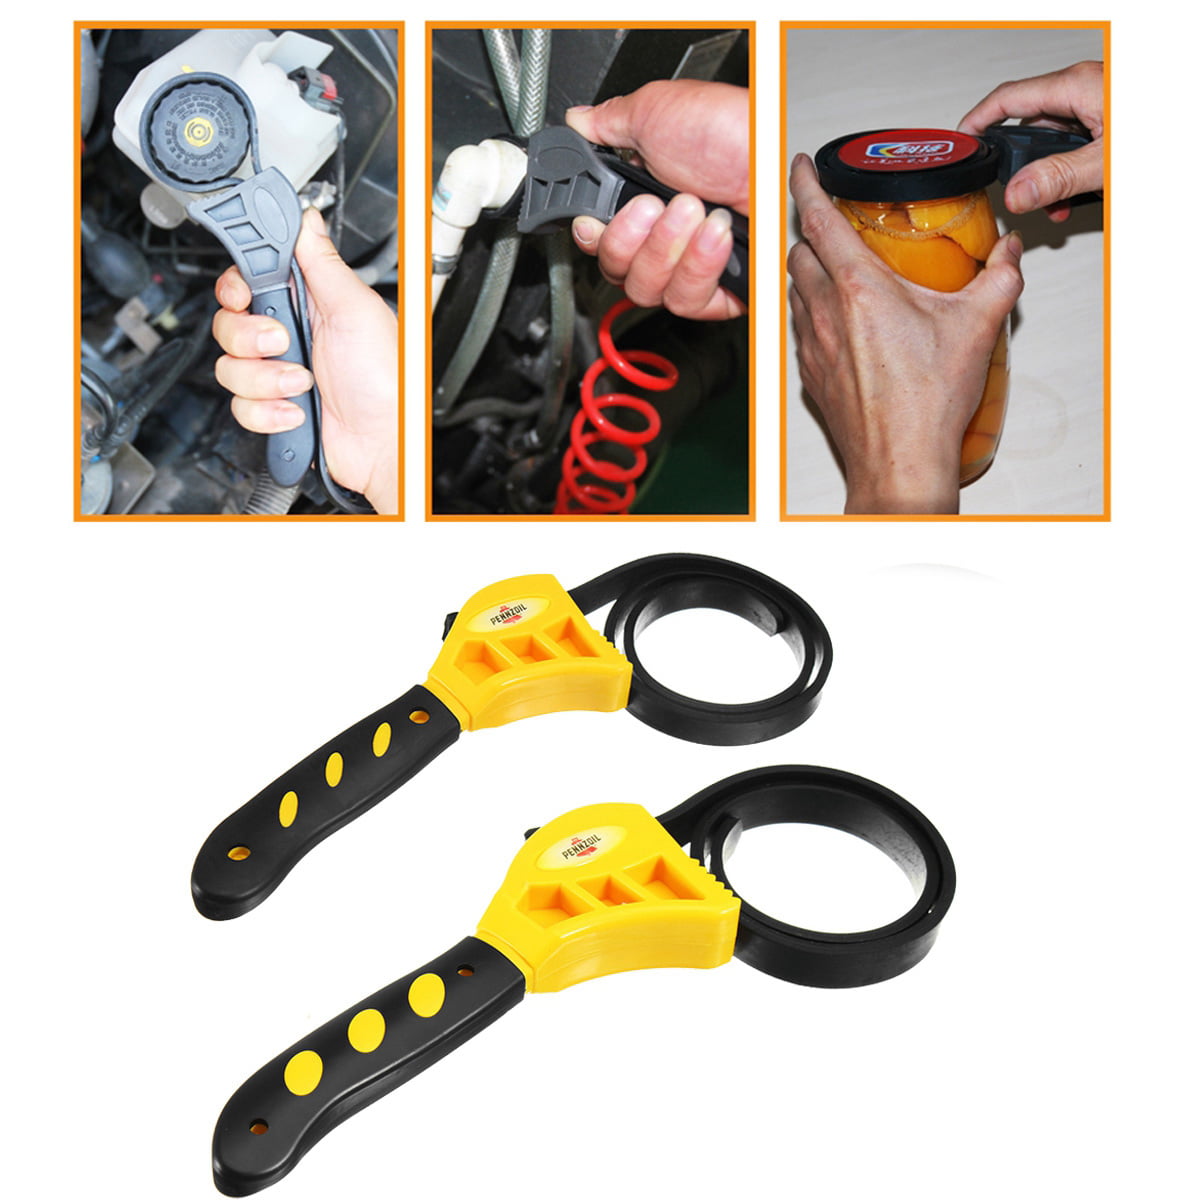 2PC Rubber Strap Wrench Set Adjustable Hand Held Lid plumbing tighten or loosen